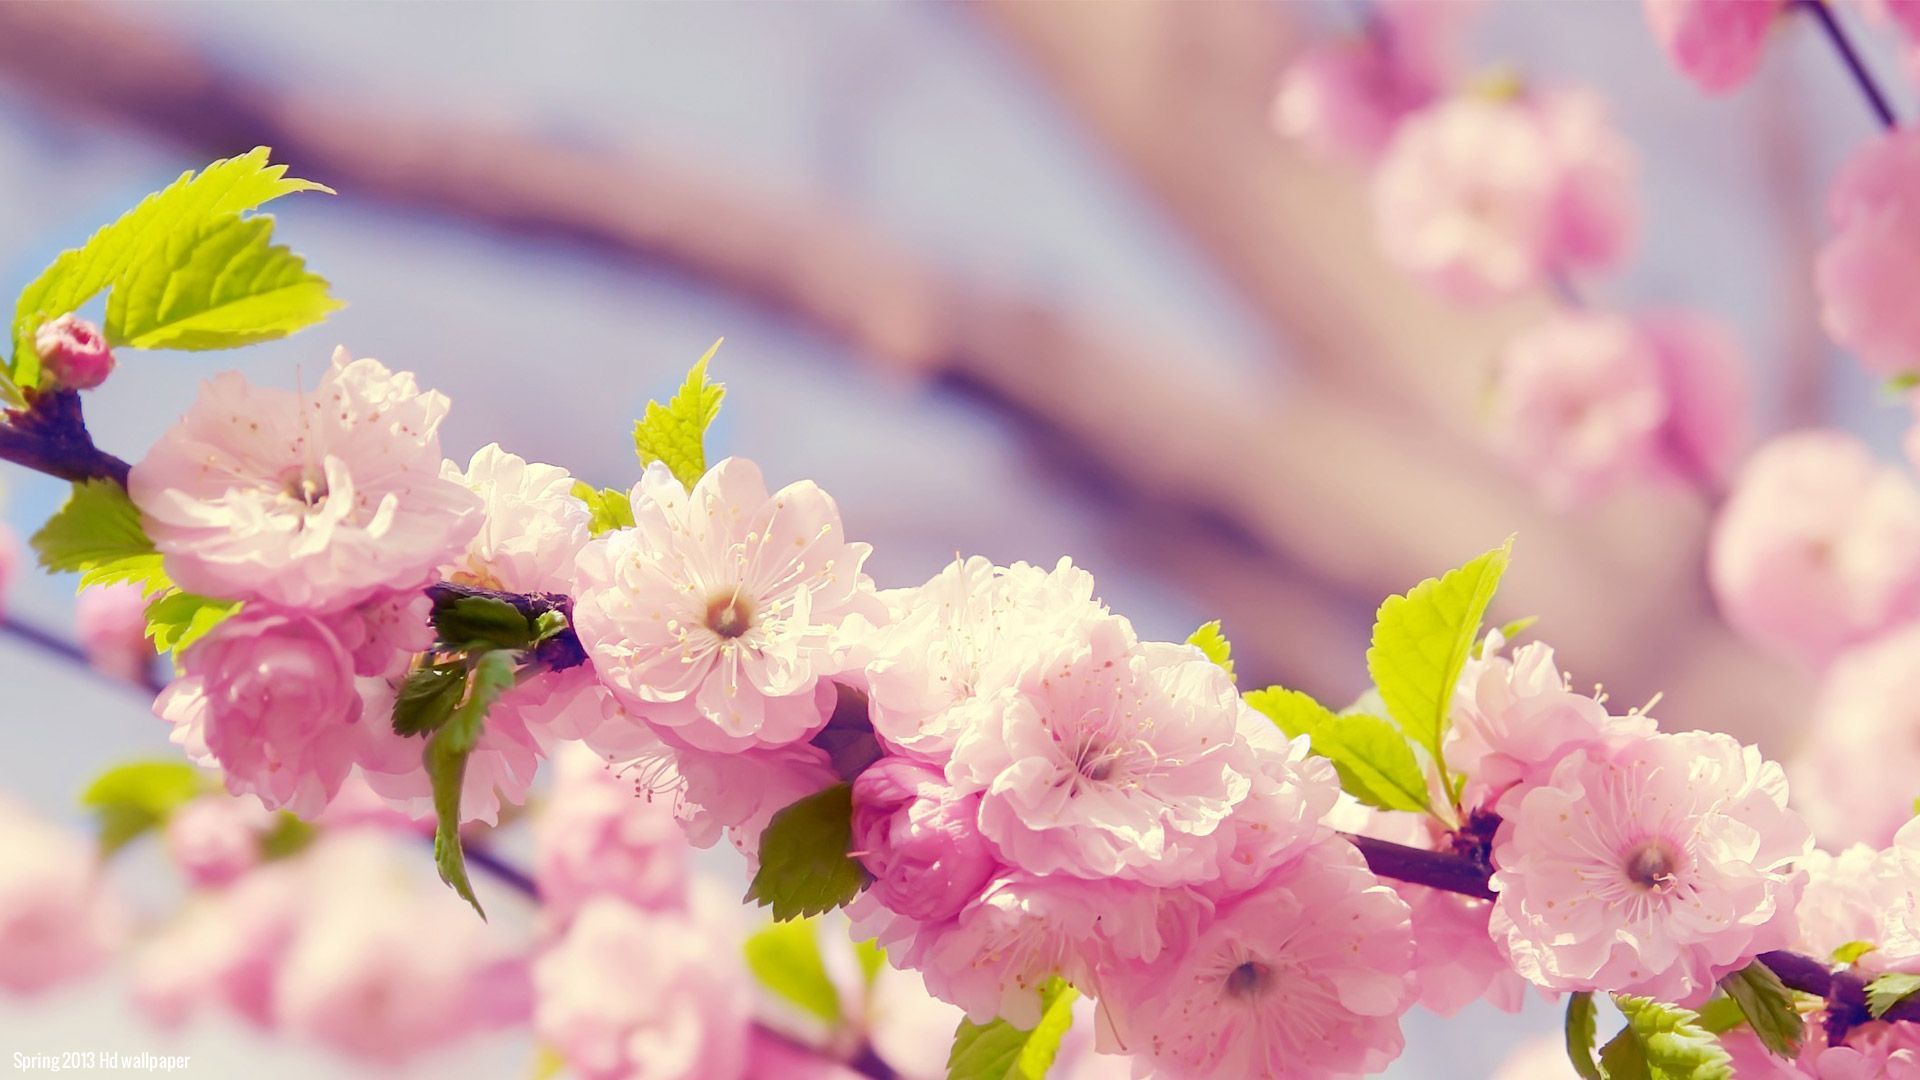 Spring Flowers Wallpapers - Desktop Backgrounds